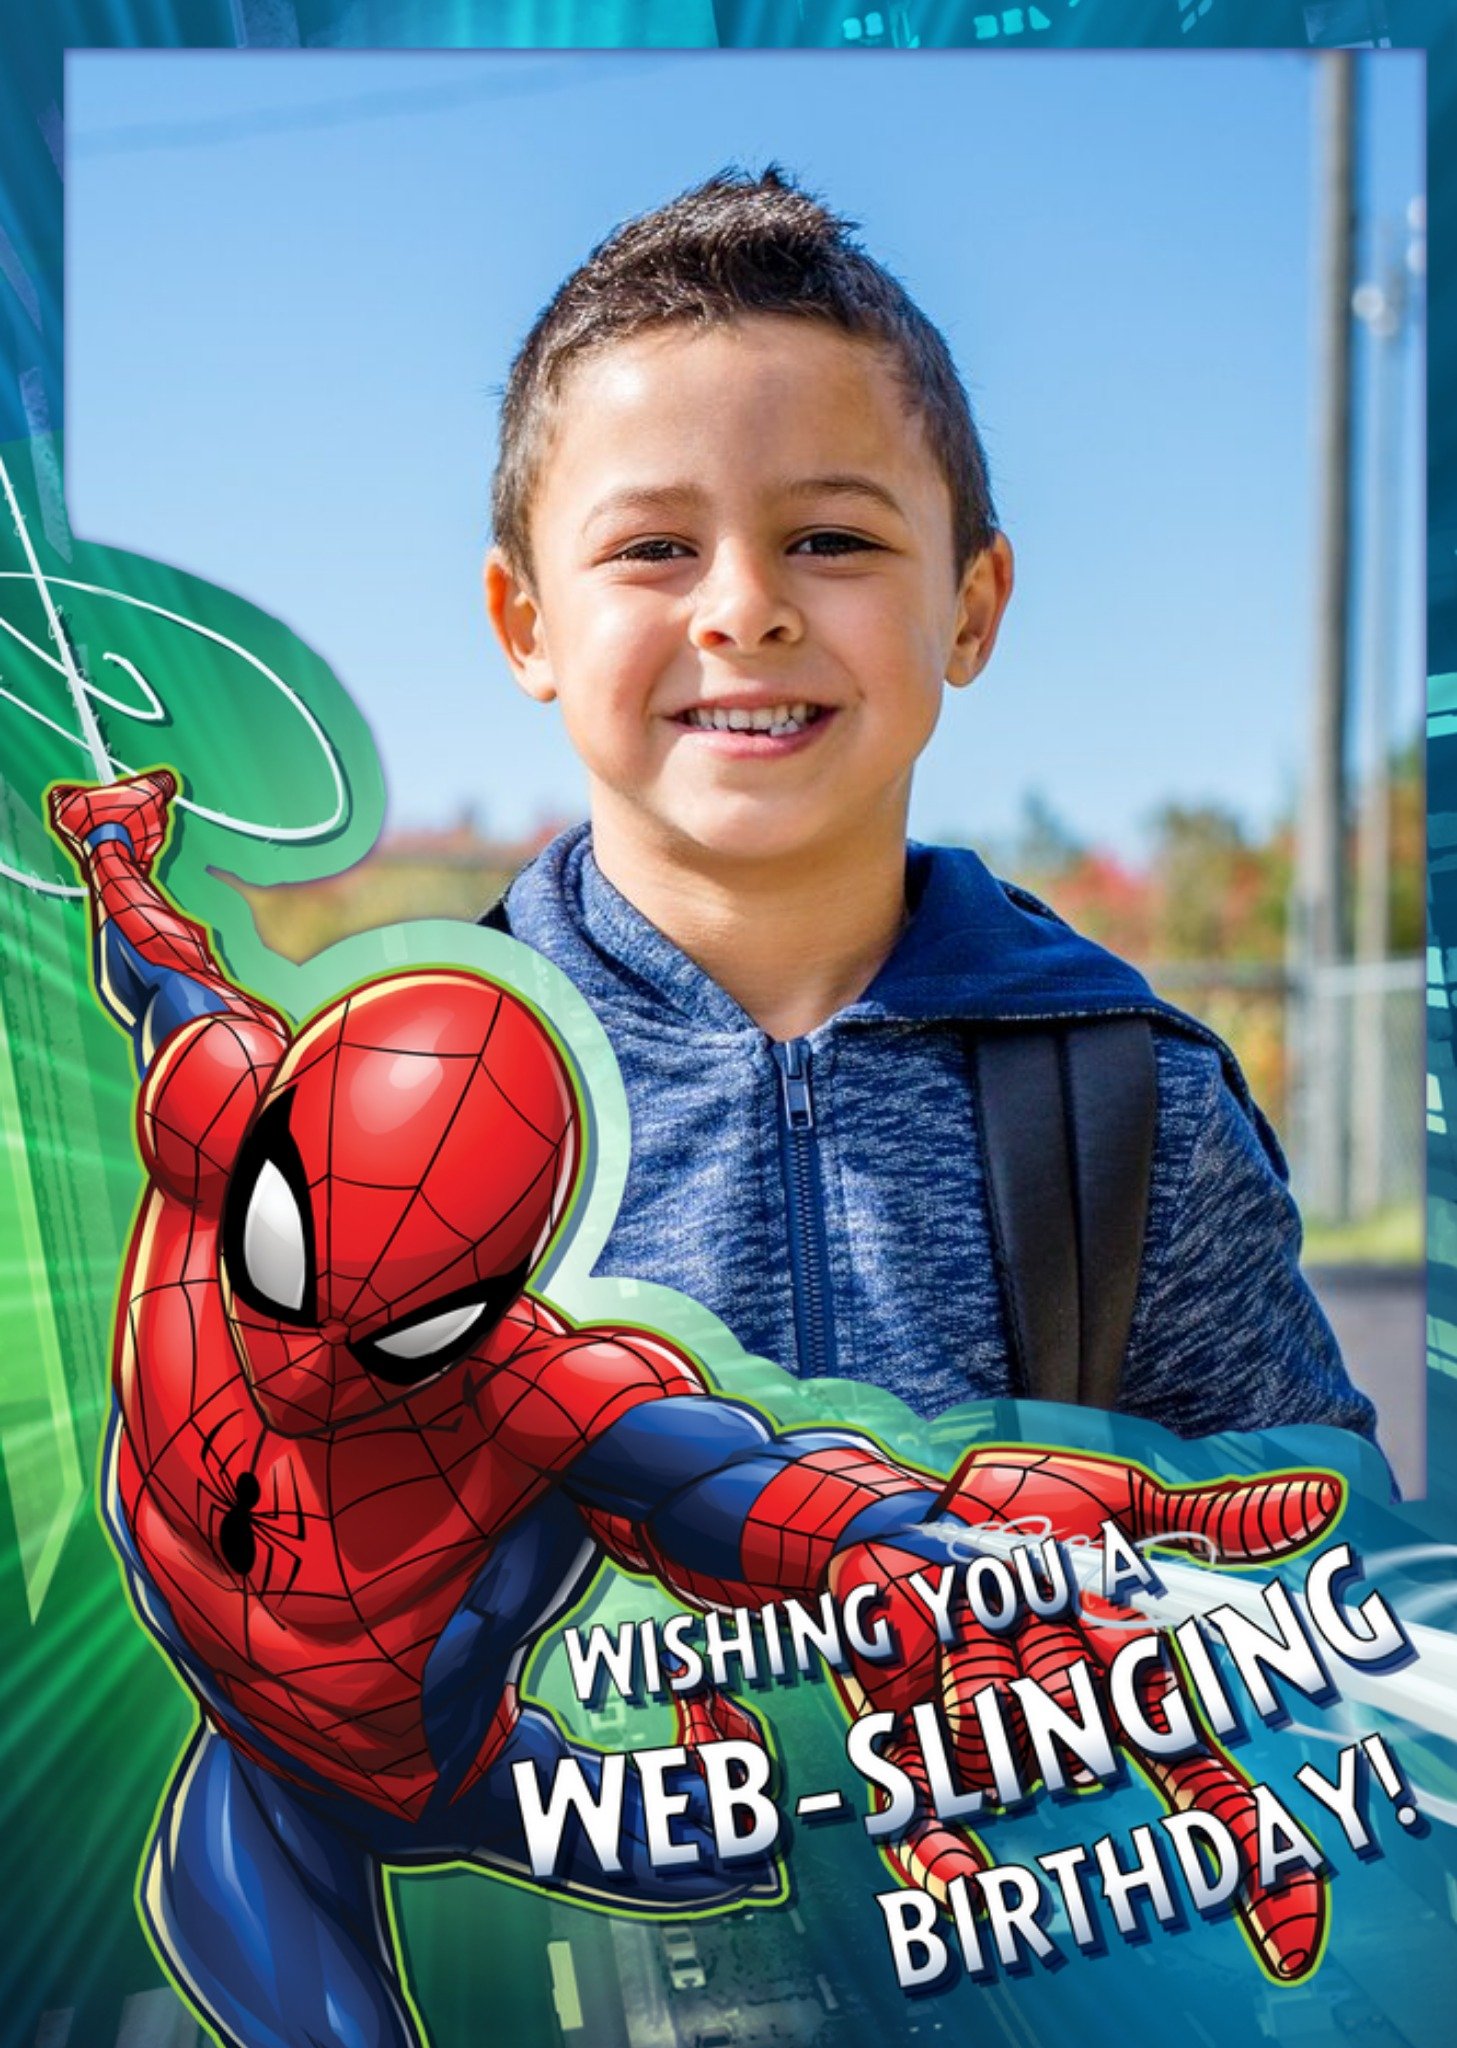 Disney Marvel Spiderman Web-Slinging Photo Upload Birthday Card Ecard